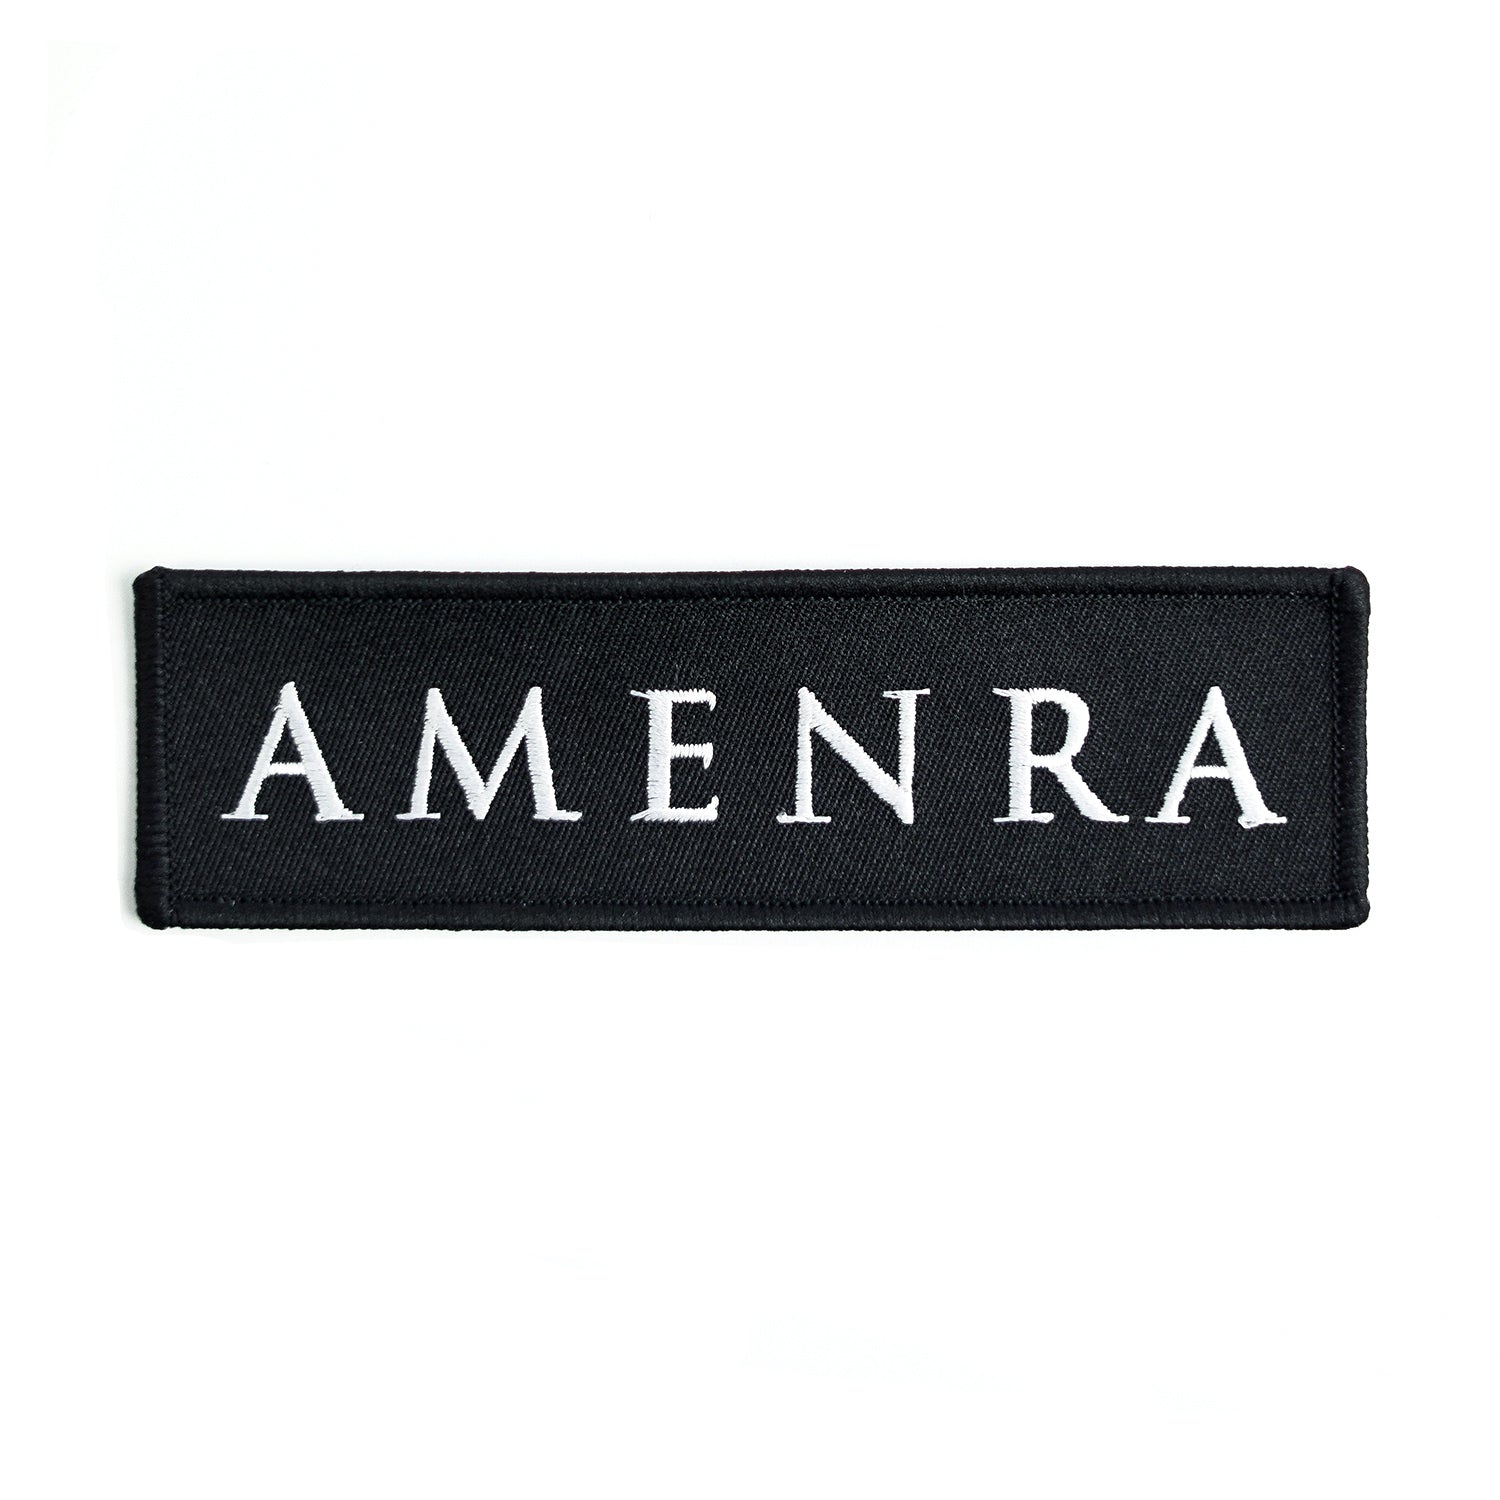 AMENRA "Logo" Patch